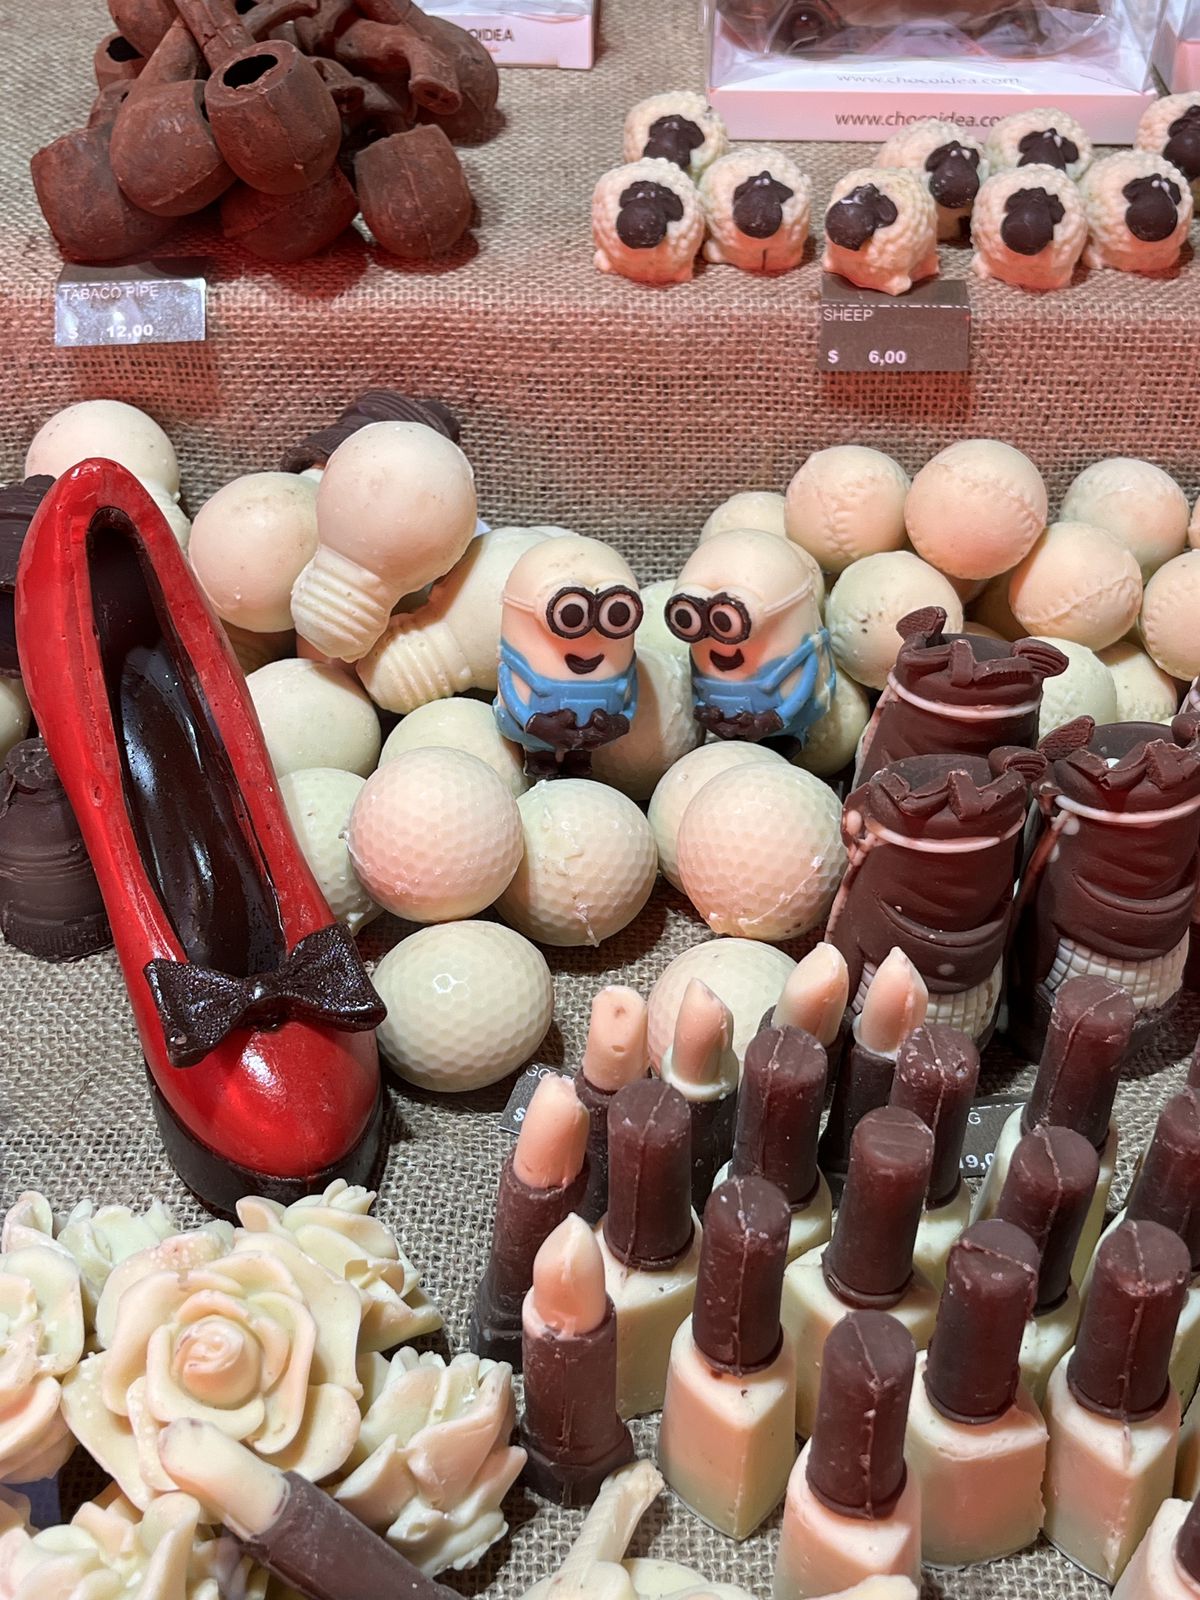 A selection of chocolates shaped like golf balls, shoes, light bulbs, and Minions.